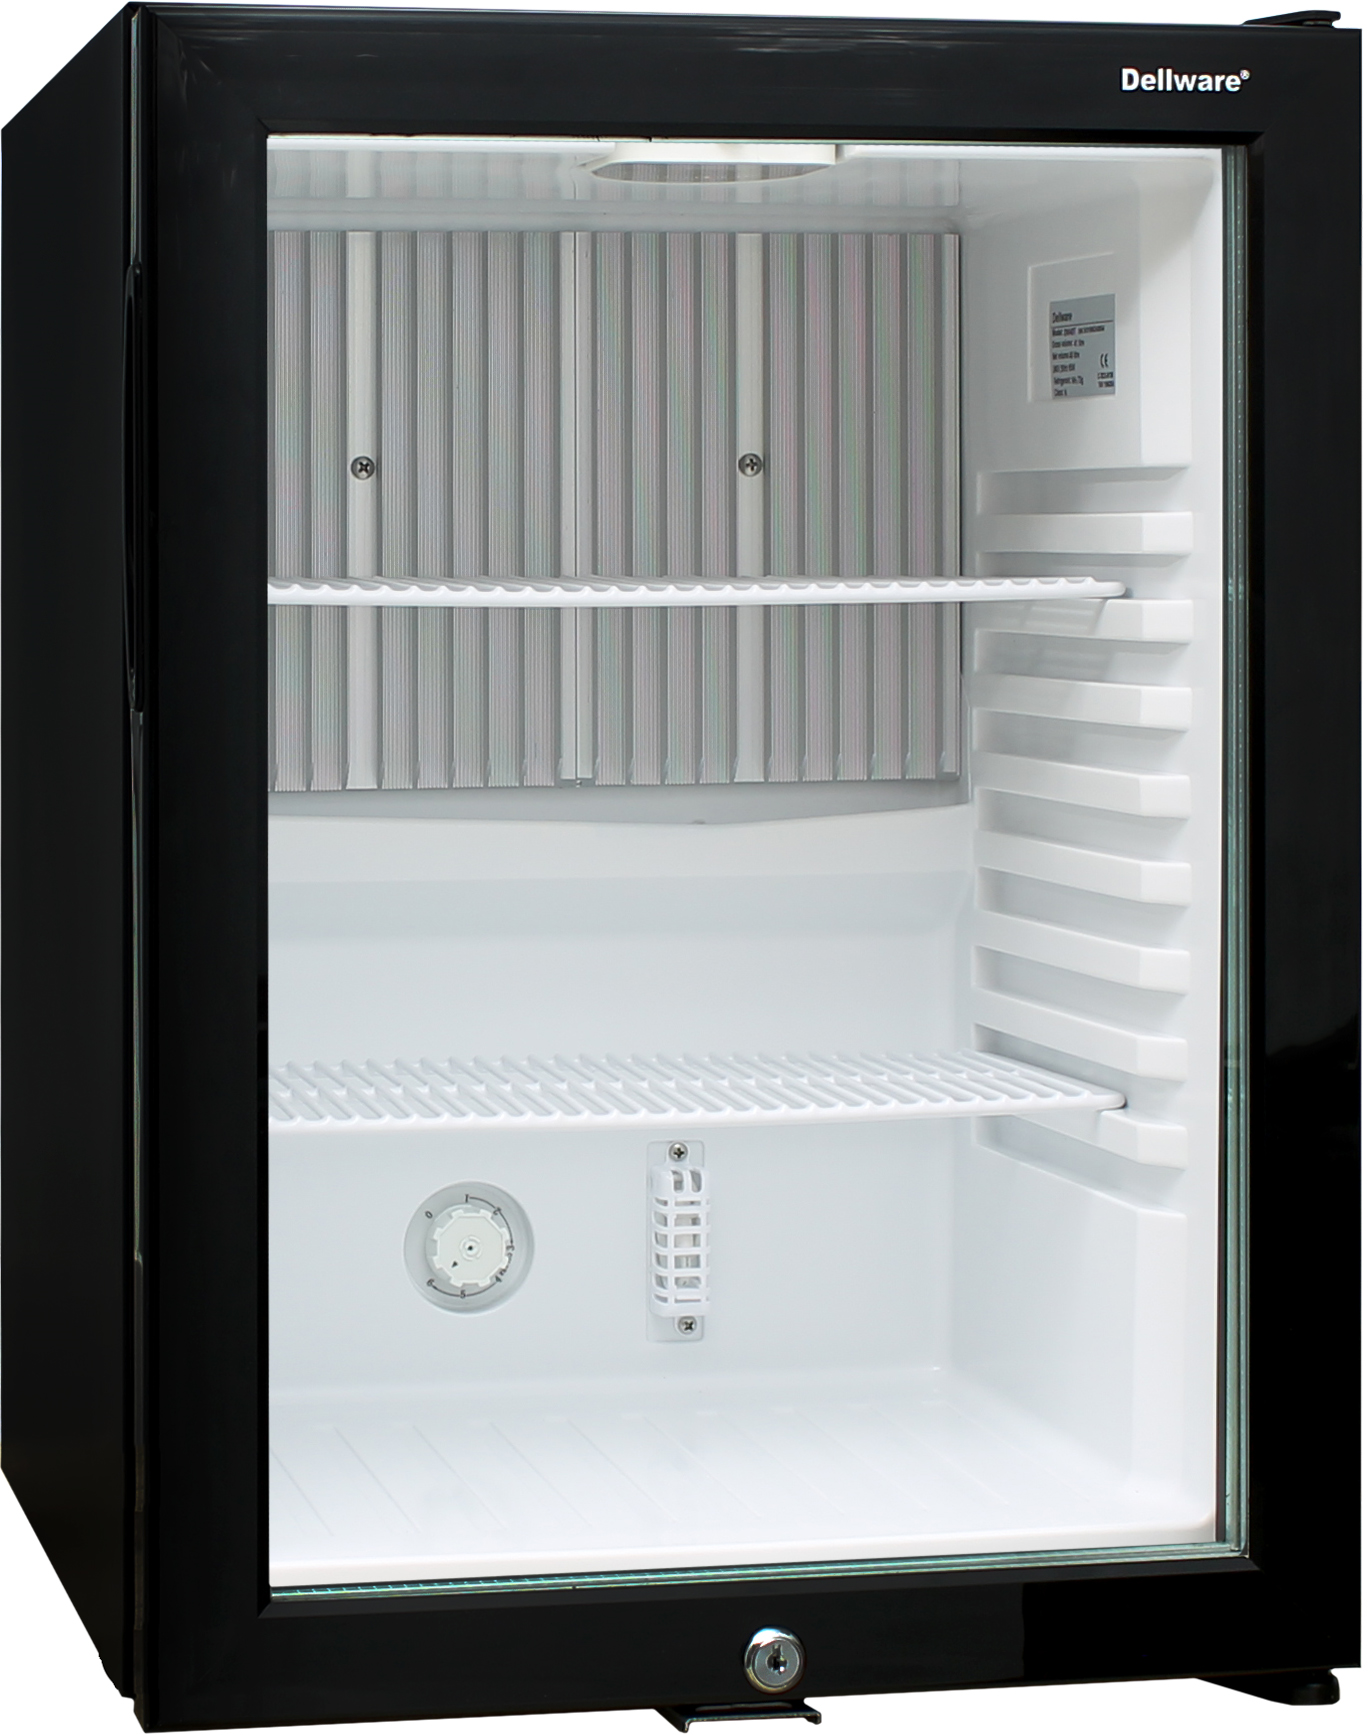 23+ Counter top fridge nz ideas in 2021 